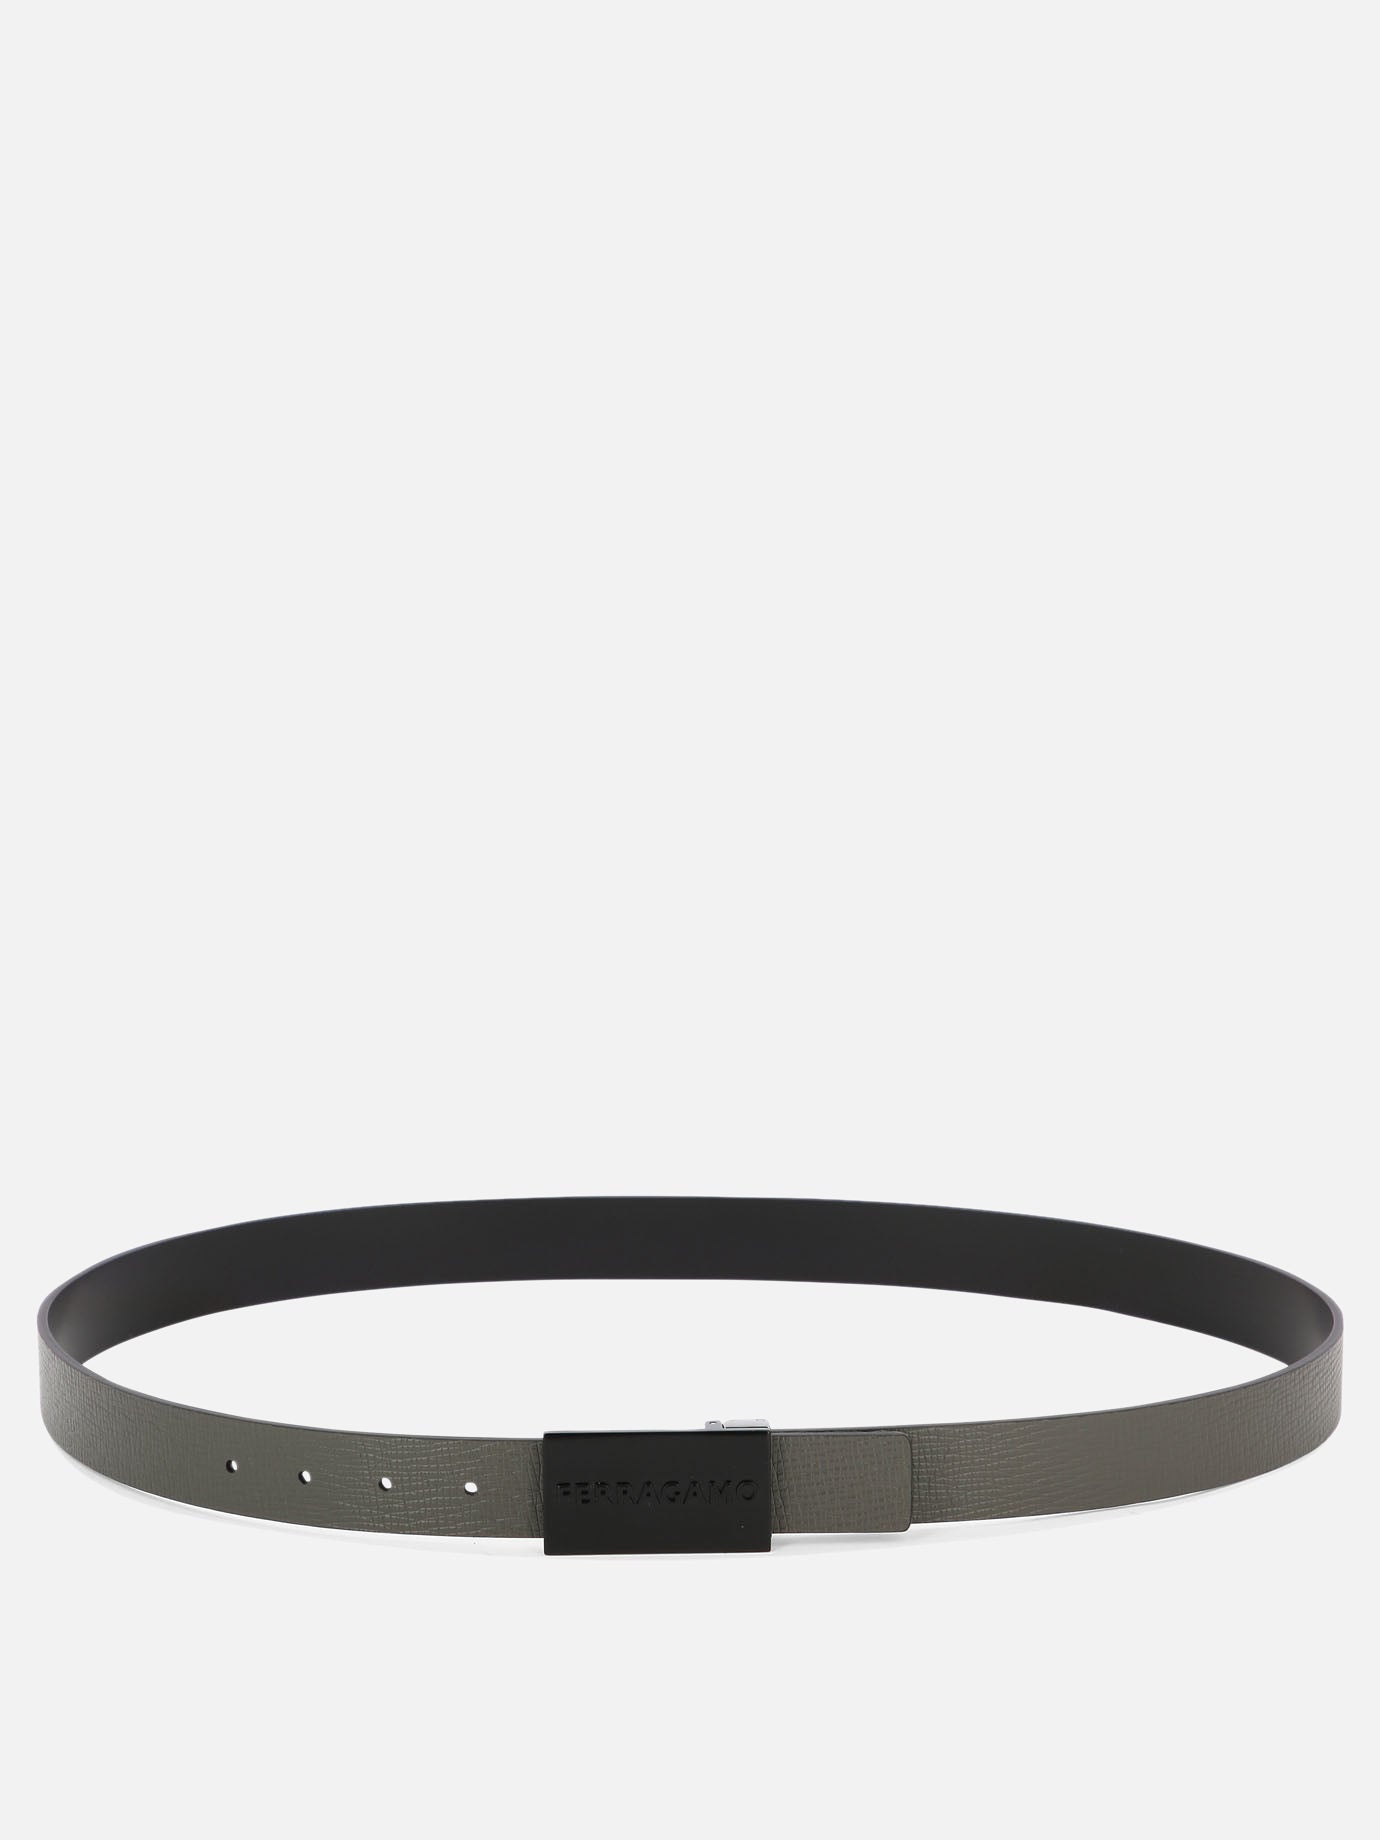 Adjustable and reversible belt